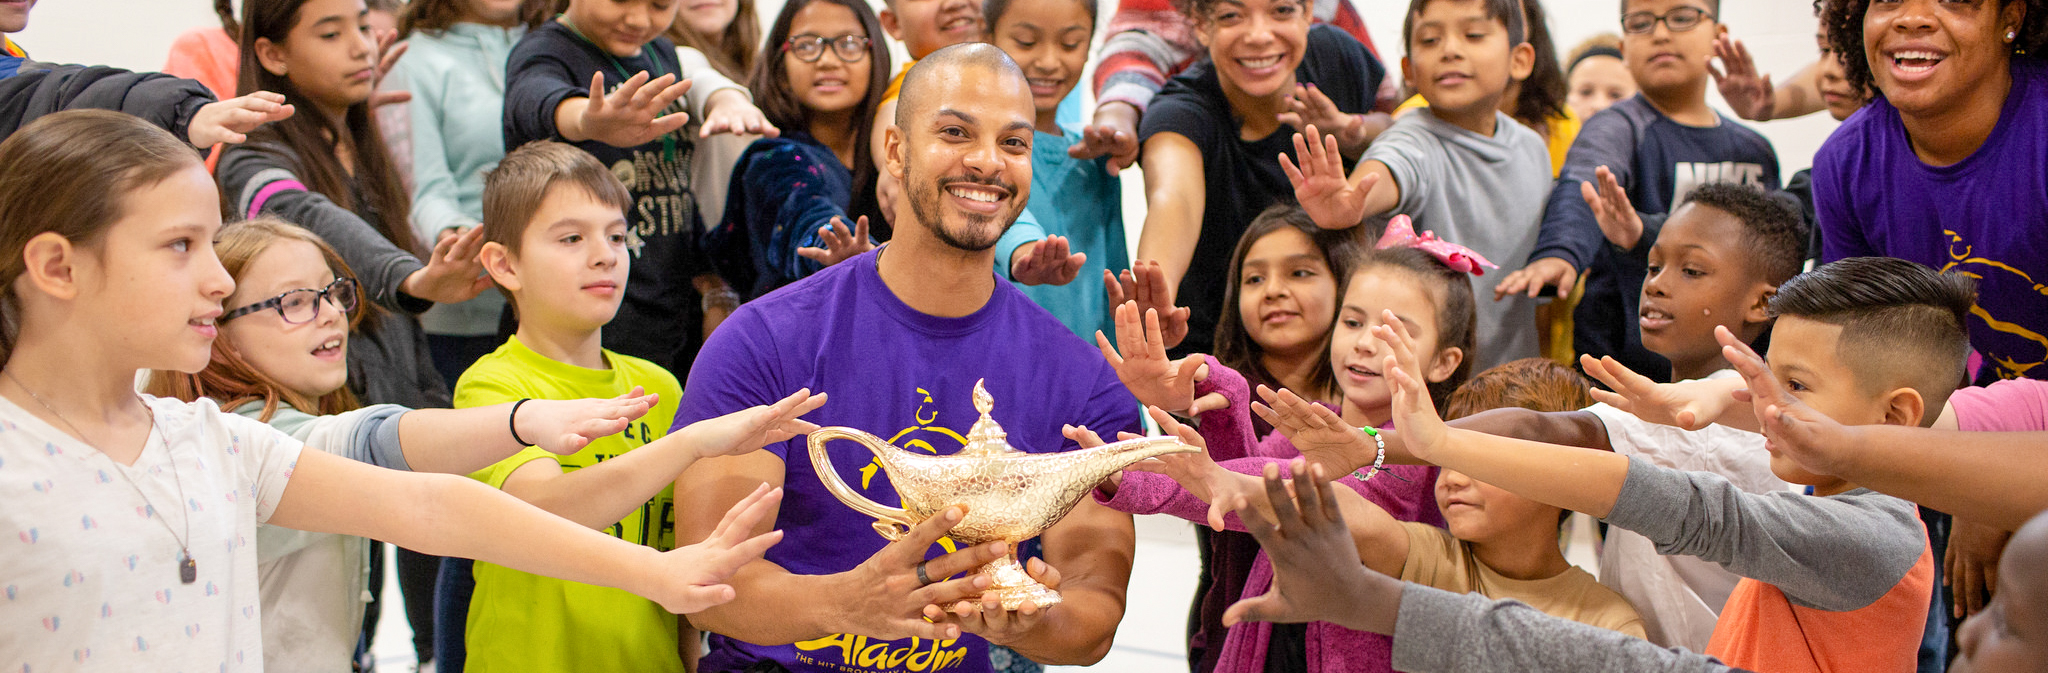 Aladdin Cast Makes Magic at Madison Elementary School